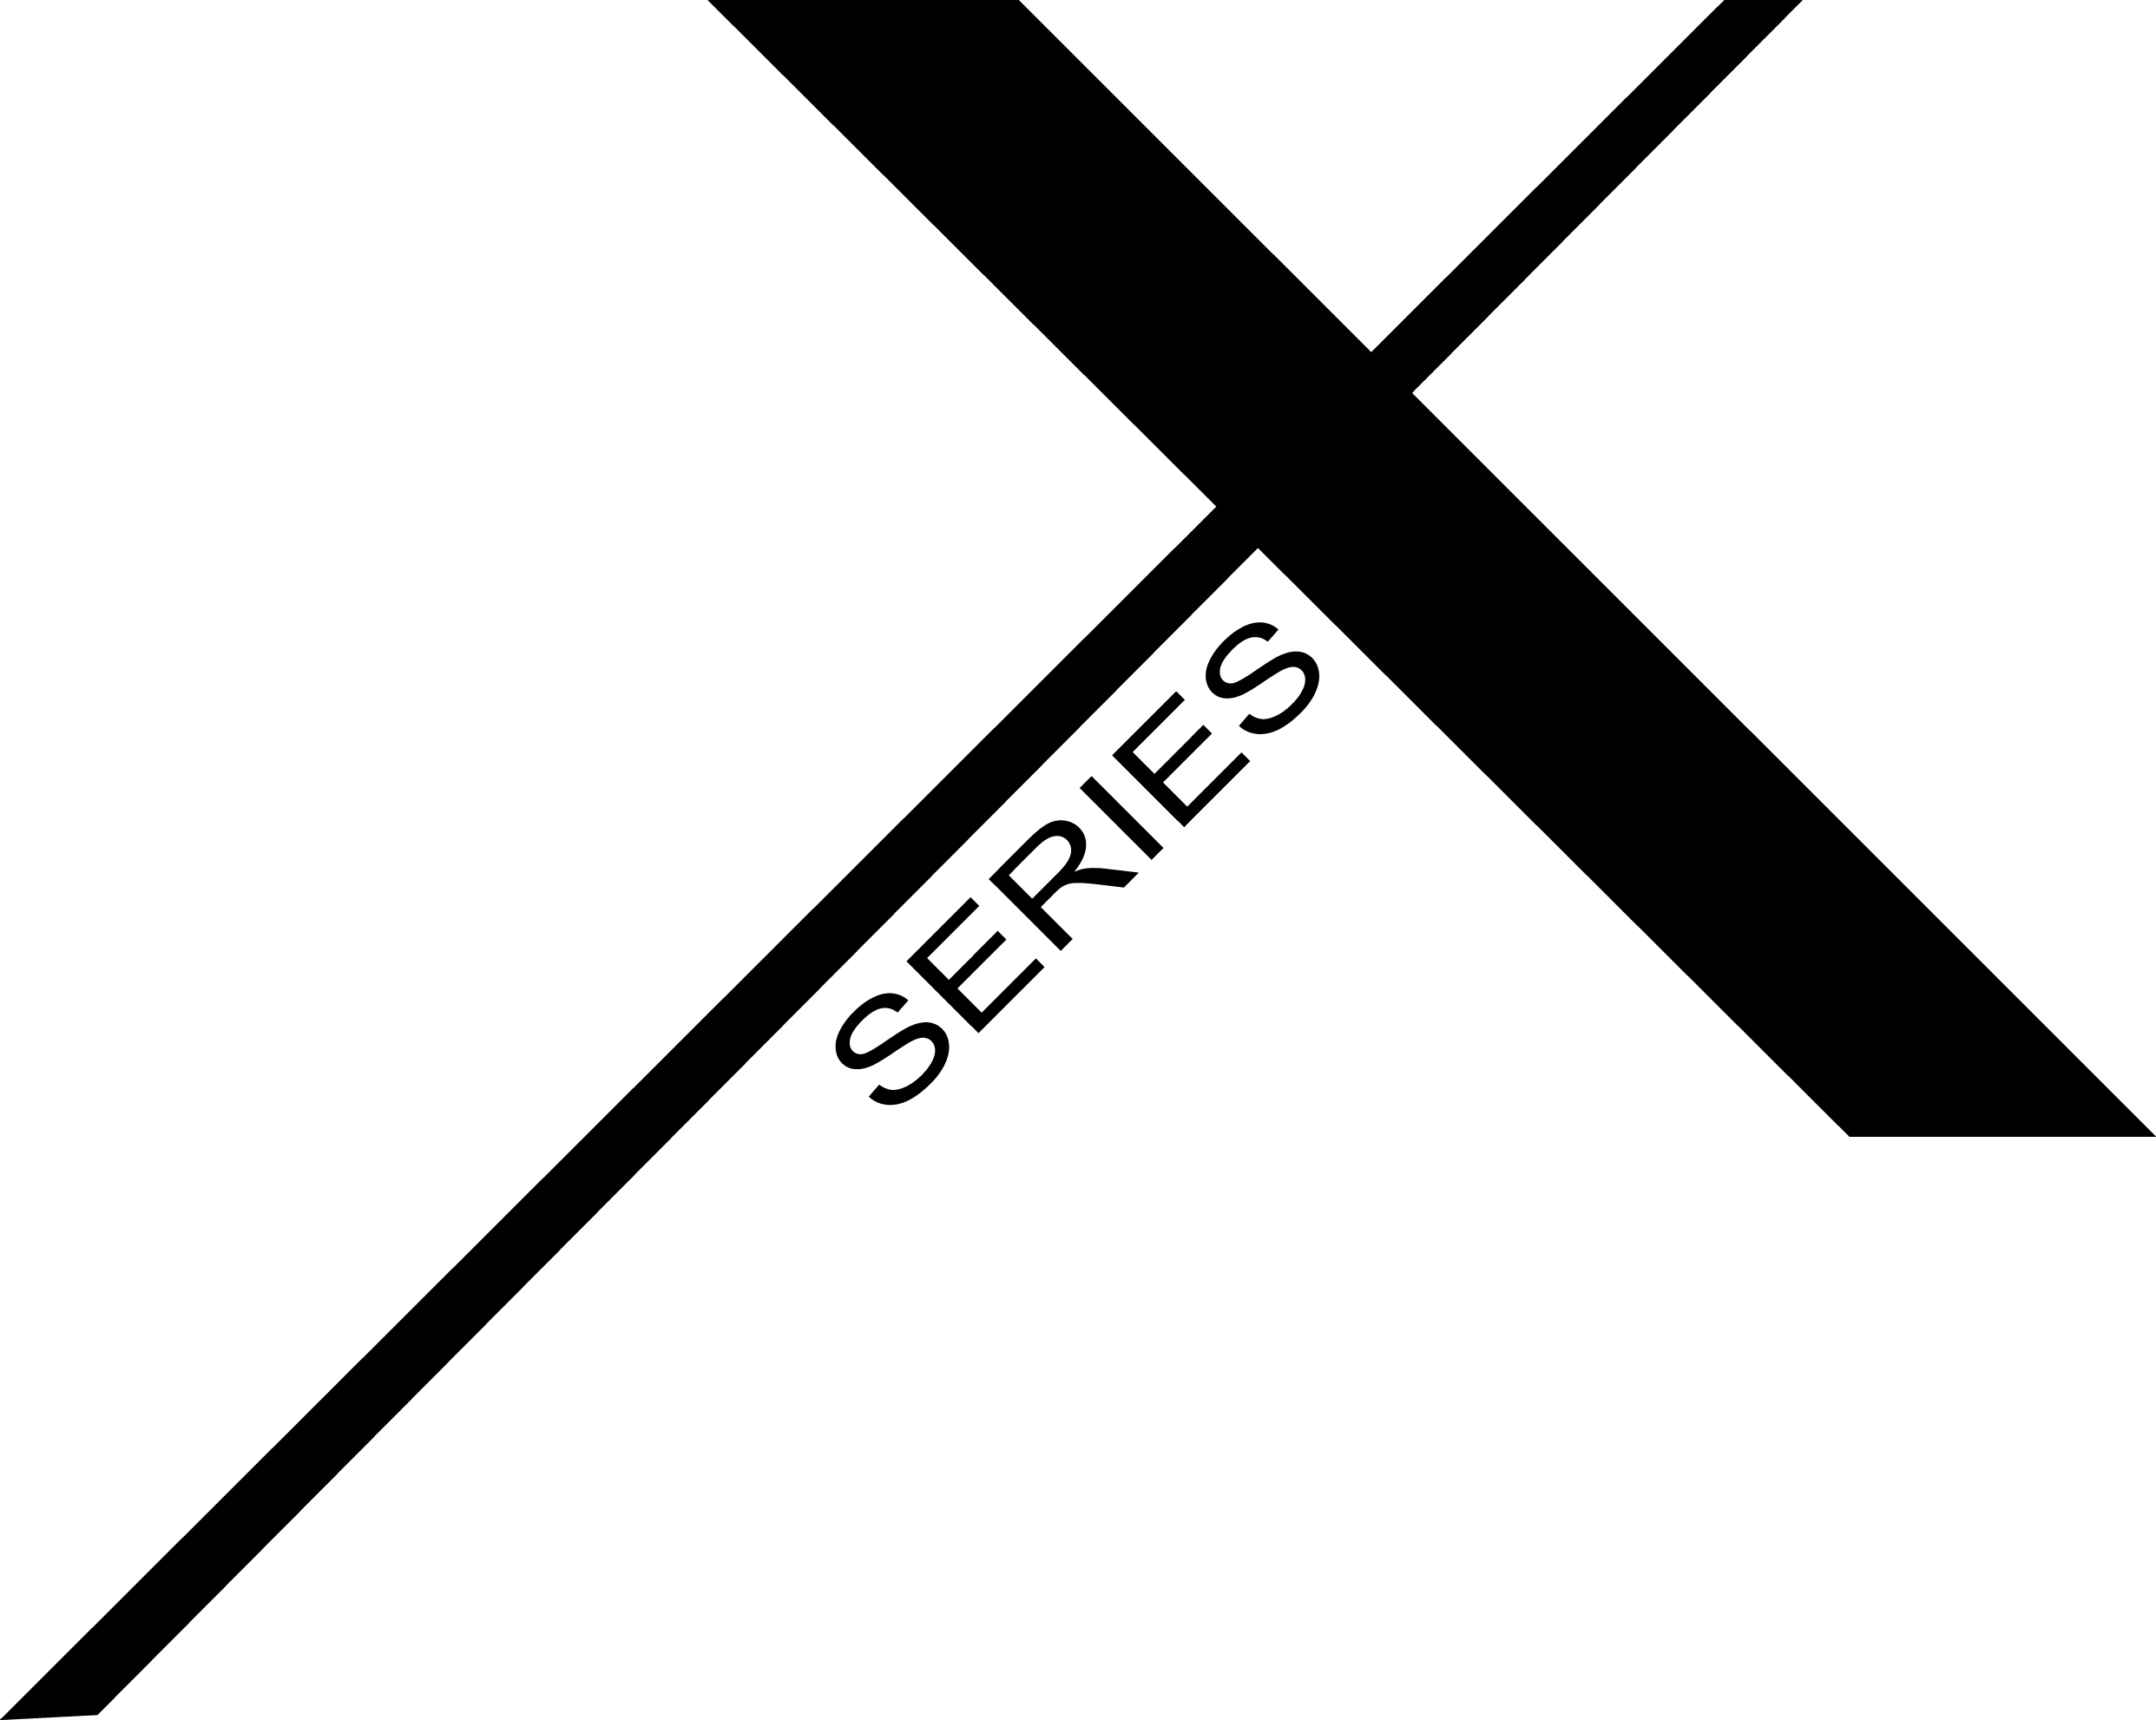 X series logo black